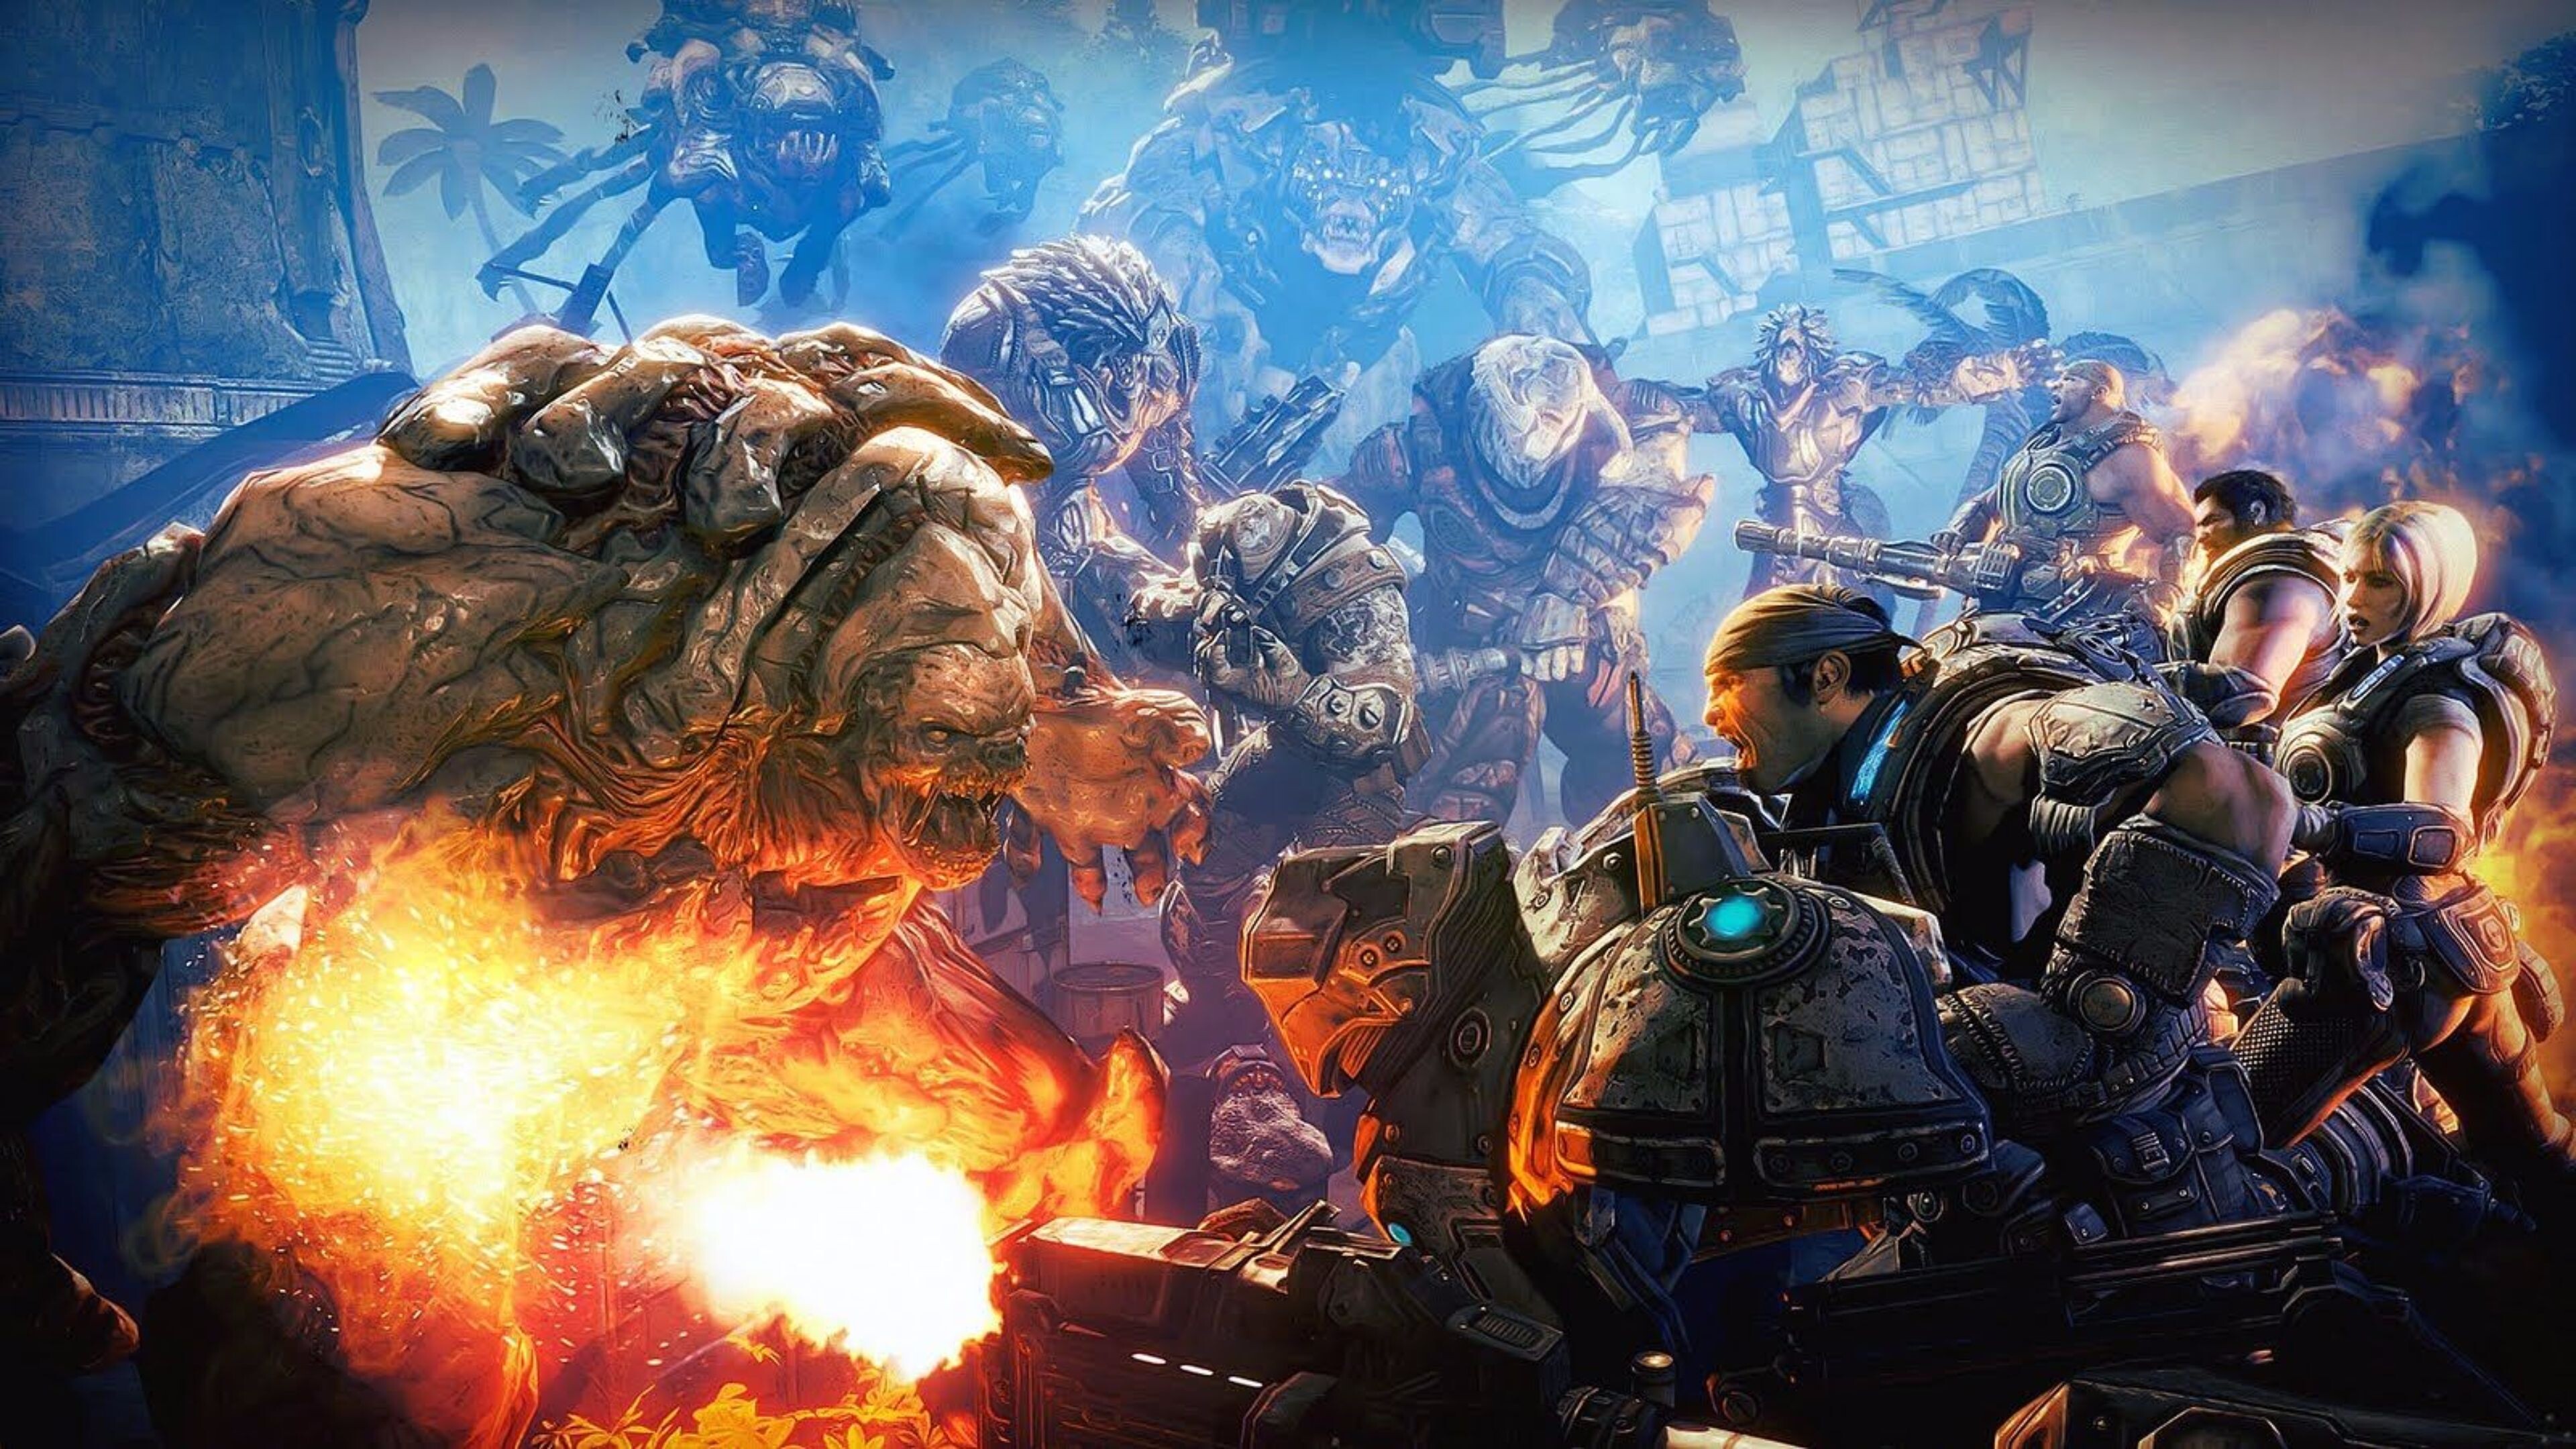 Gears of War 4 4k wallpaper, Epic gaming wallpapers, Action-packed battles, Immersive experience, 3840x2160 4K Desktop